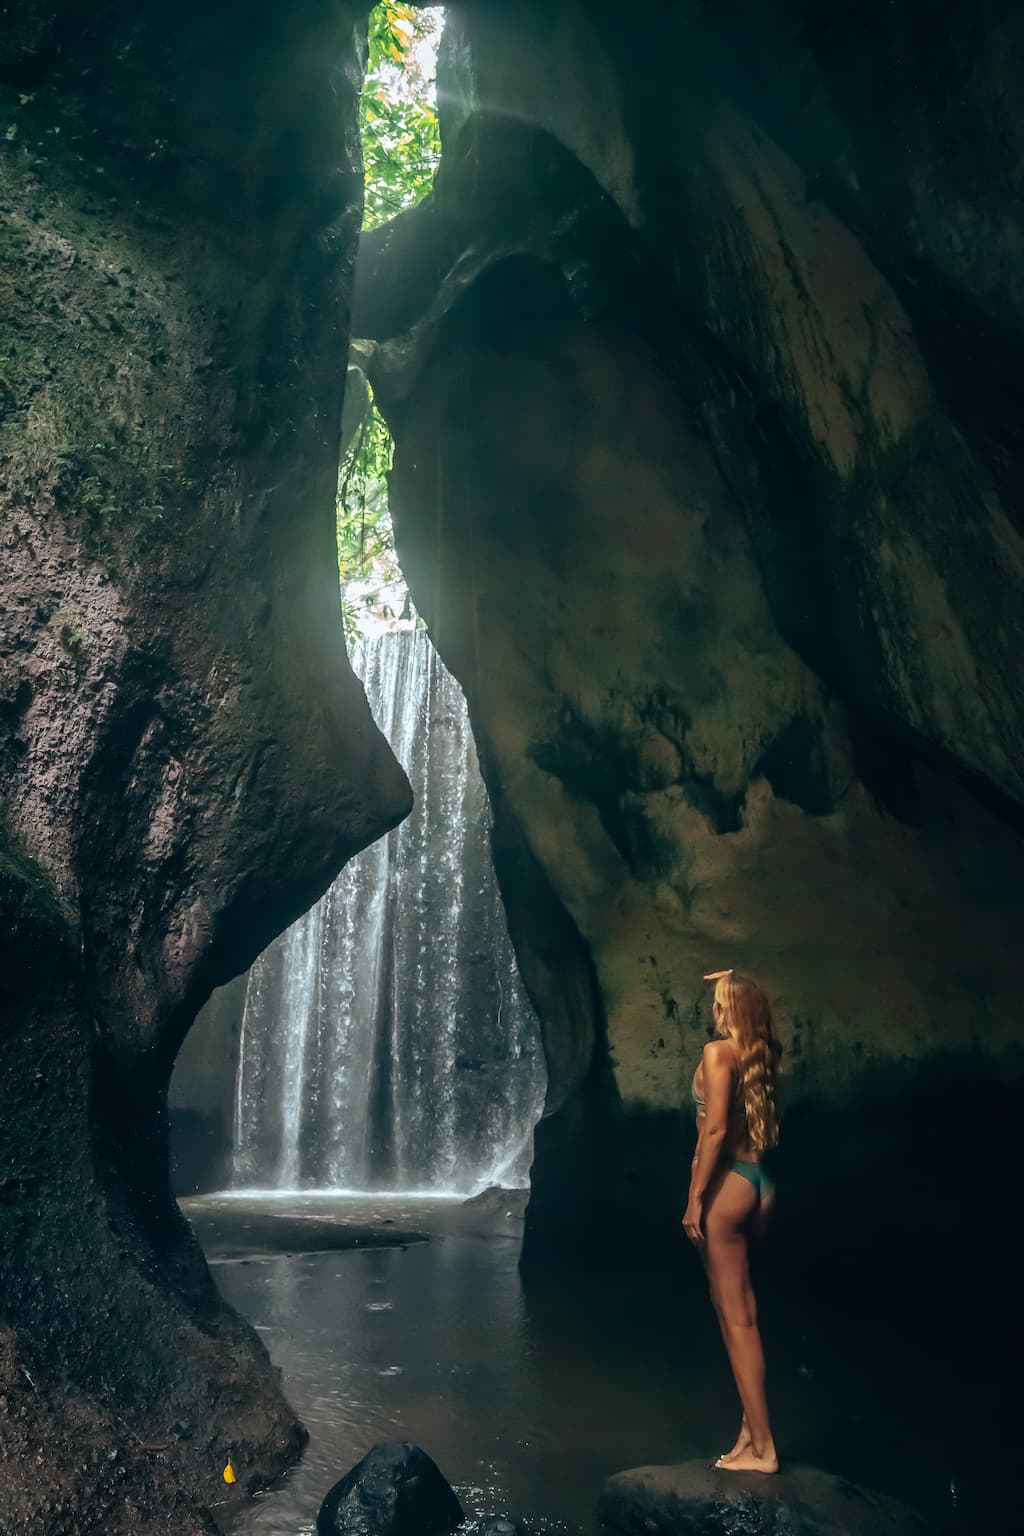 Tukad Cepung Waterfall, Bali